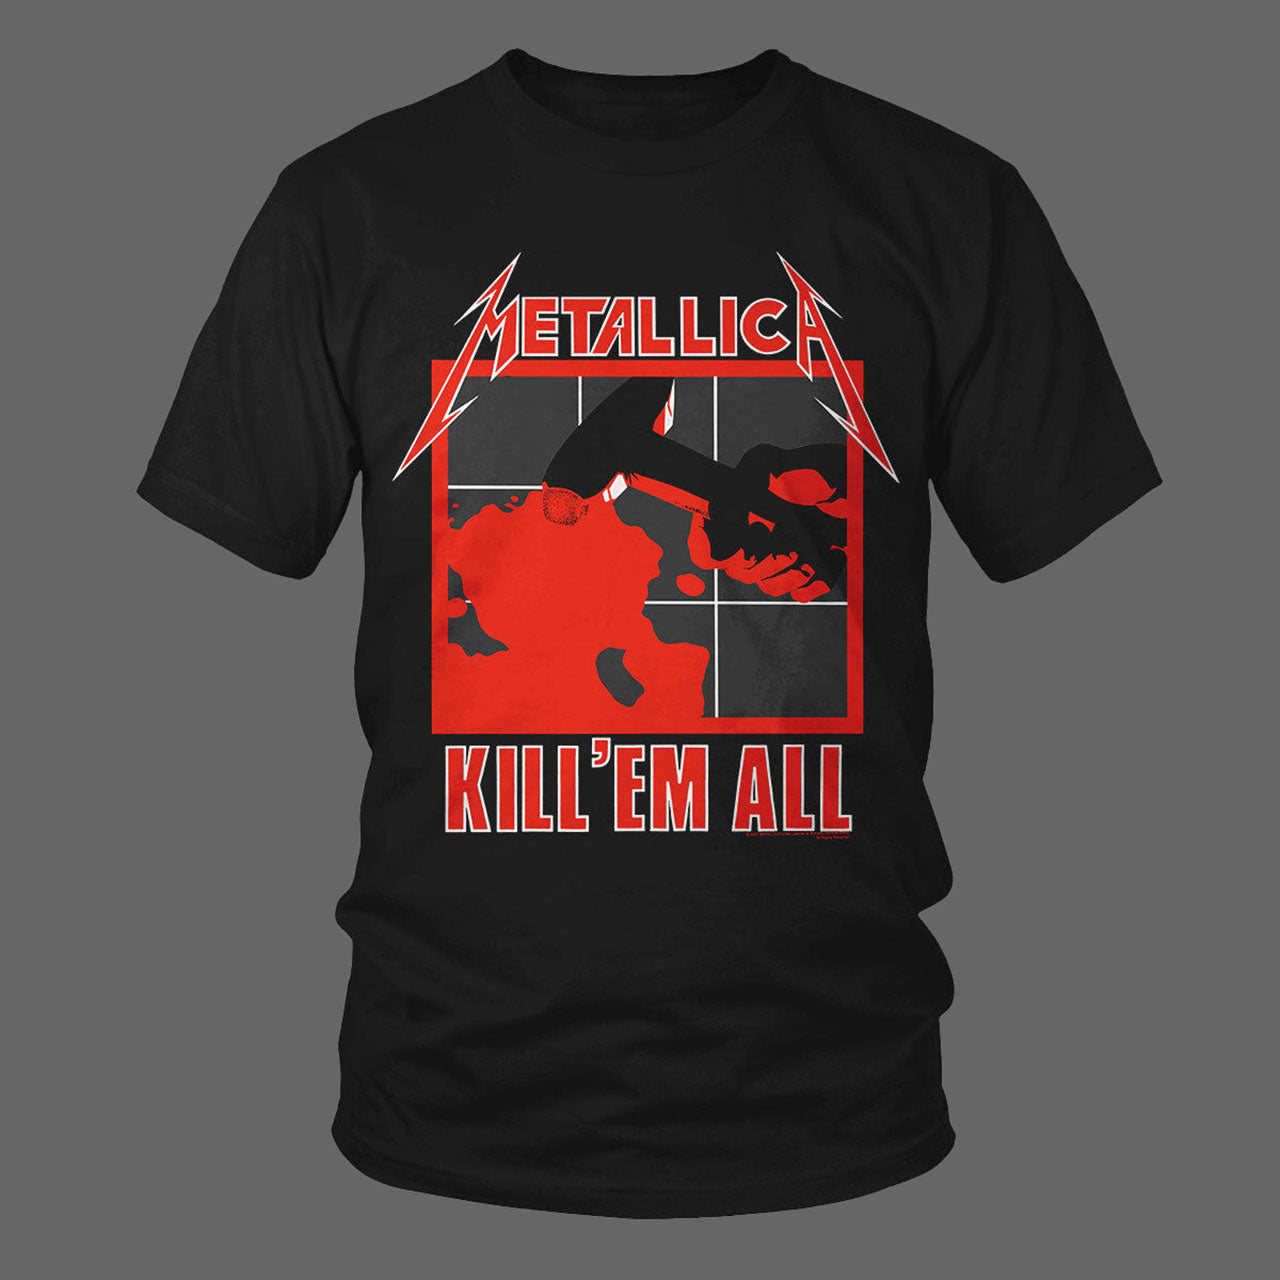 Metallica - Kill 'Em All / Electric Chair (T-Shirt)